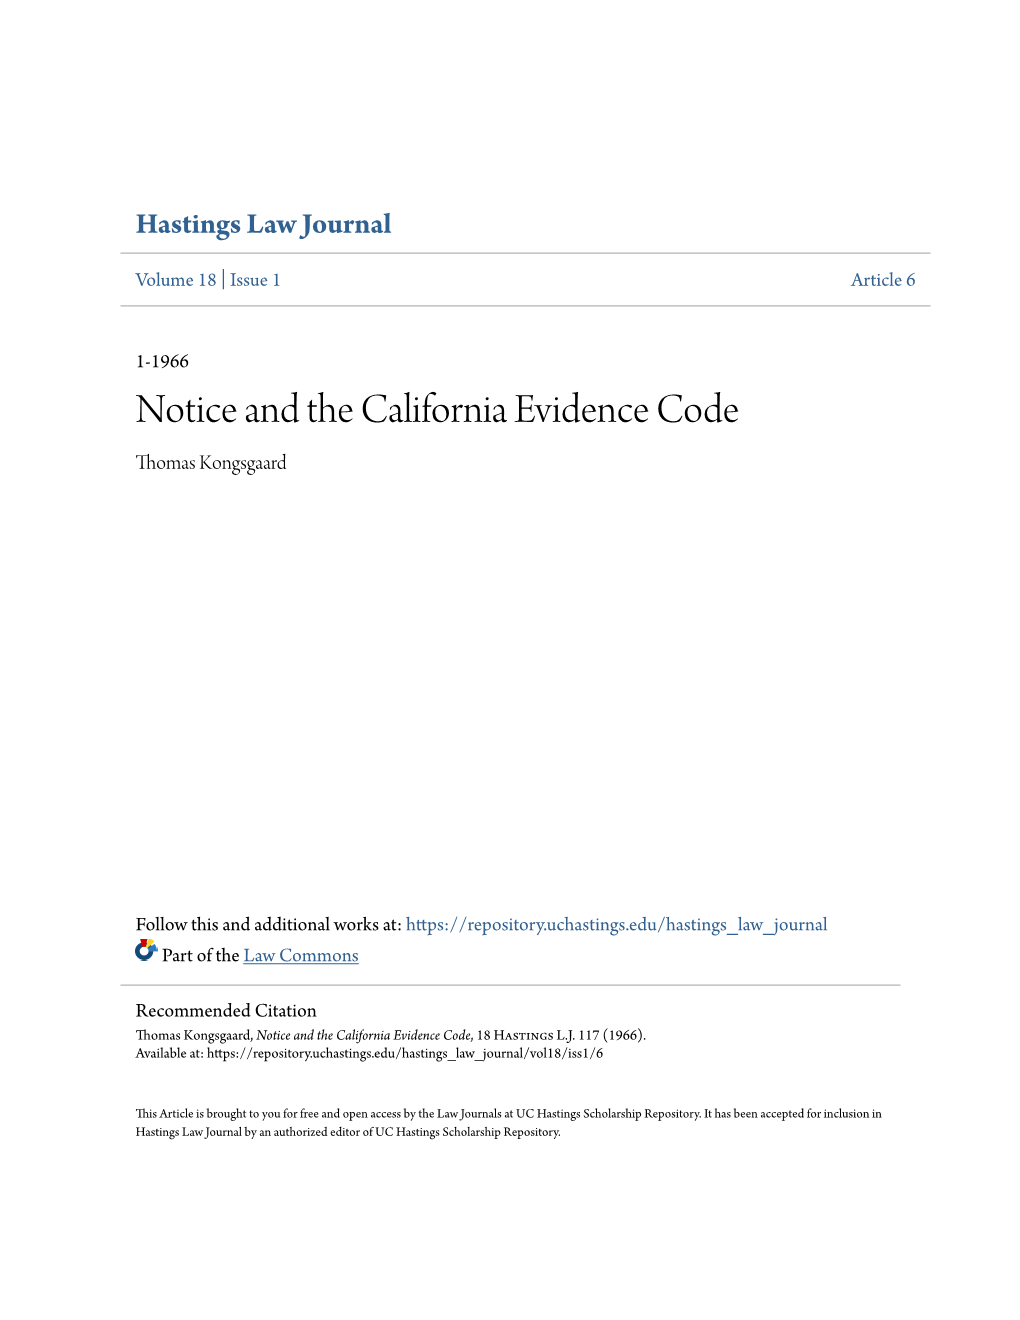 Notice and the California Evidence Code Thomas Kongsgaard